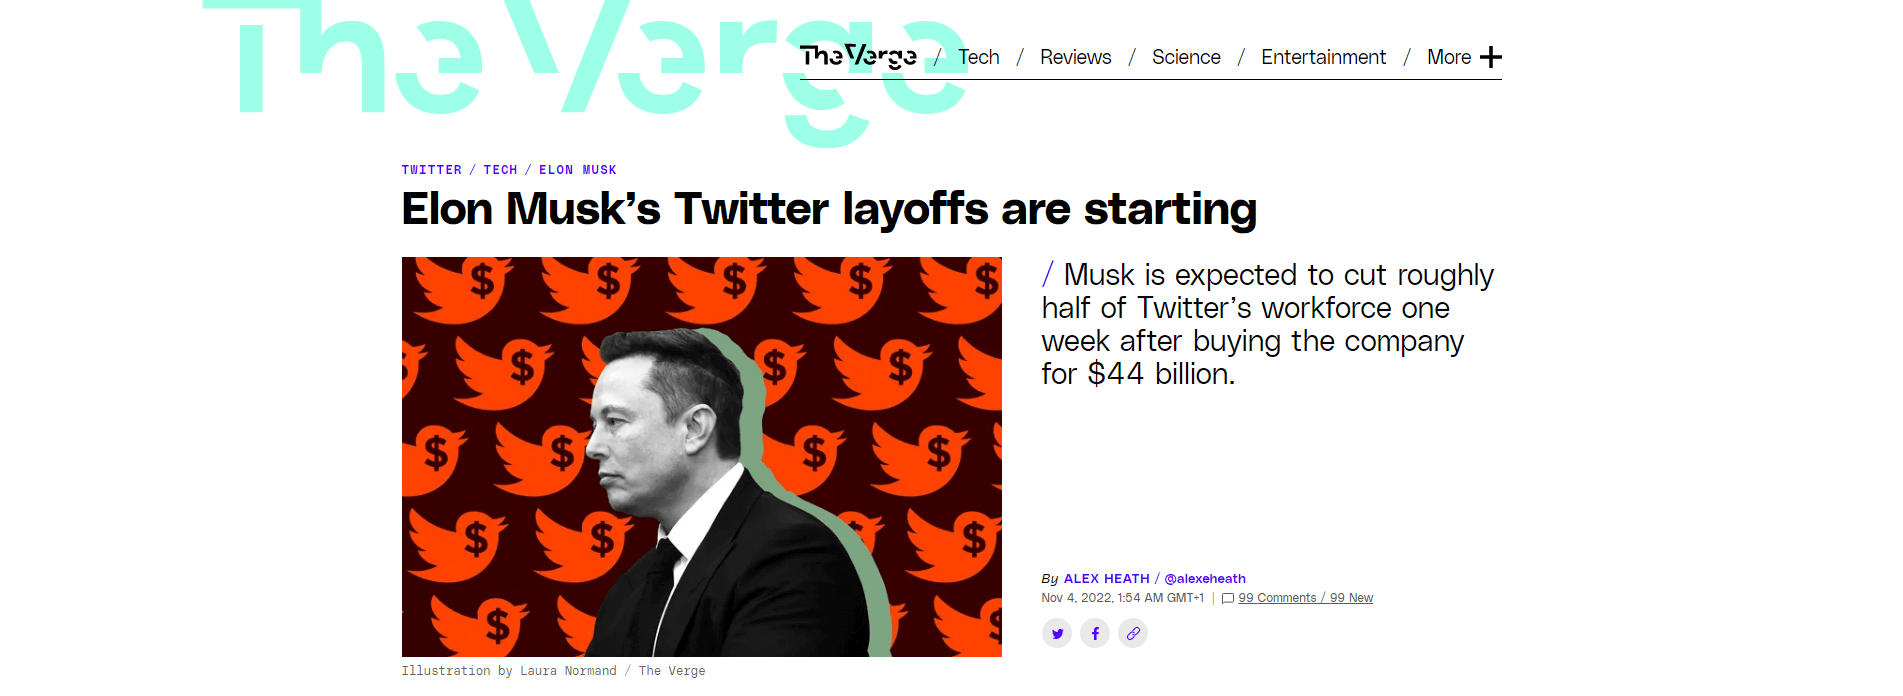 Elon Musk’s Twitter layoffs are starting